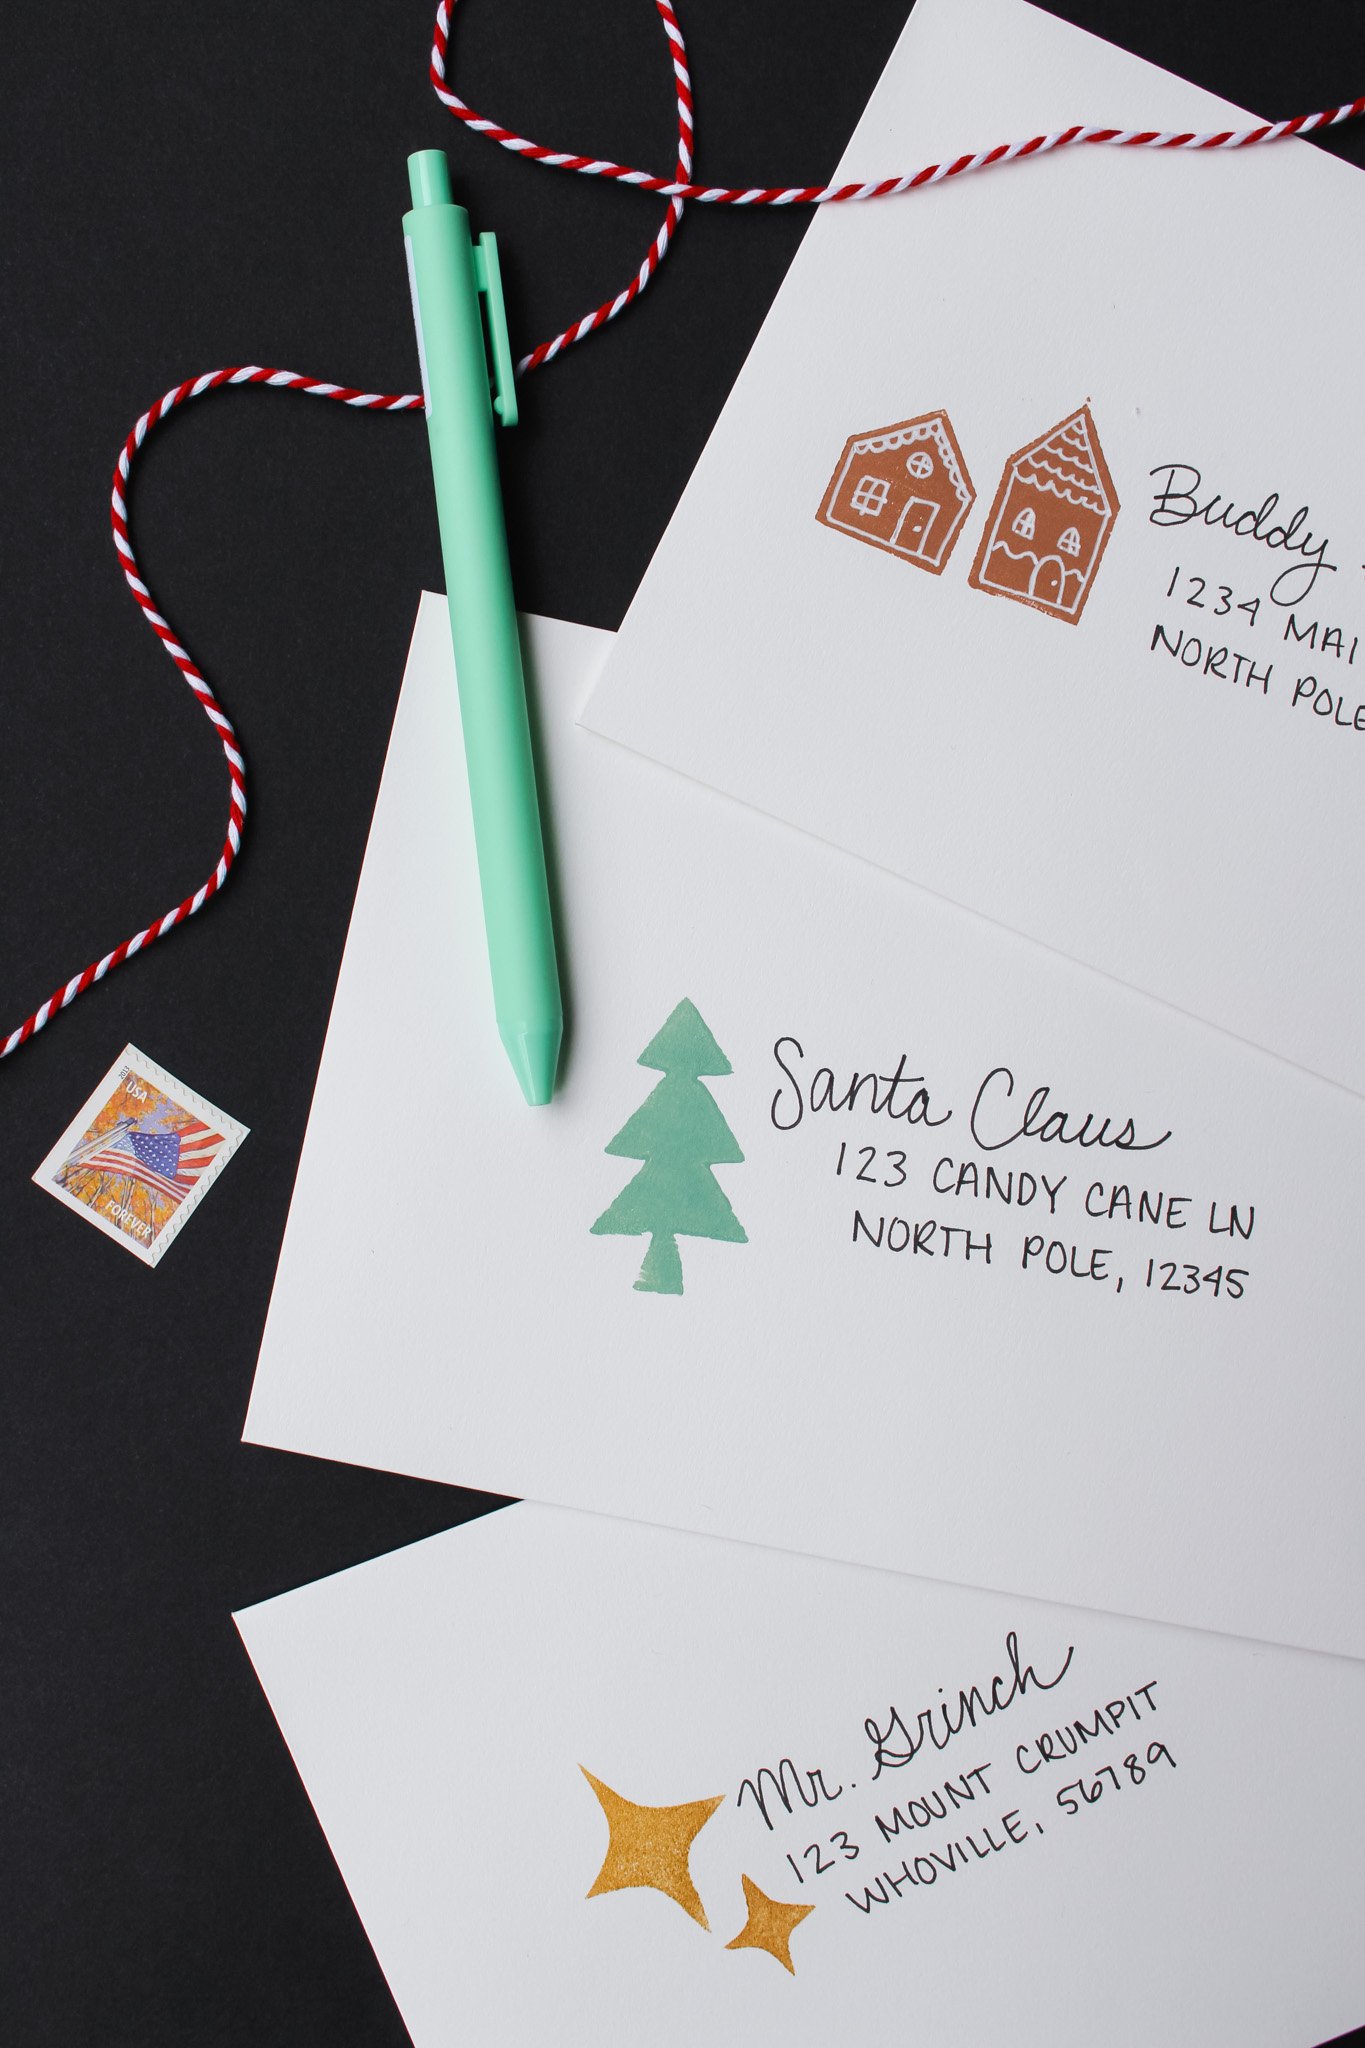 How to Make Envelope or Stamp Glue